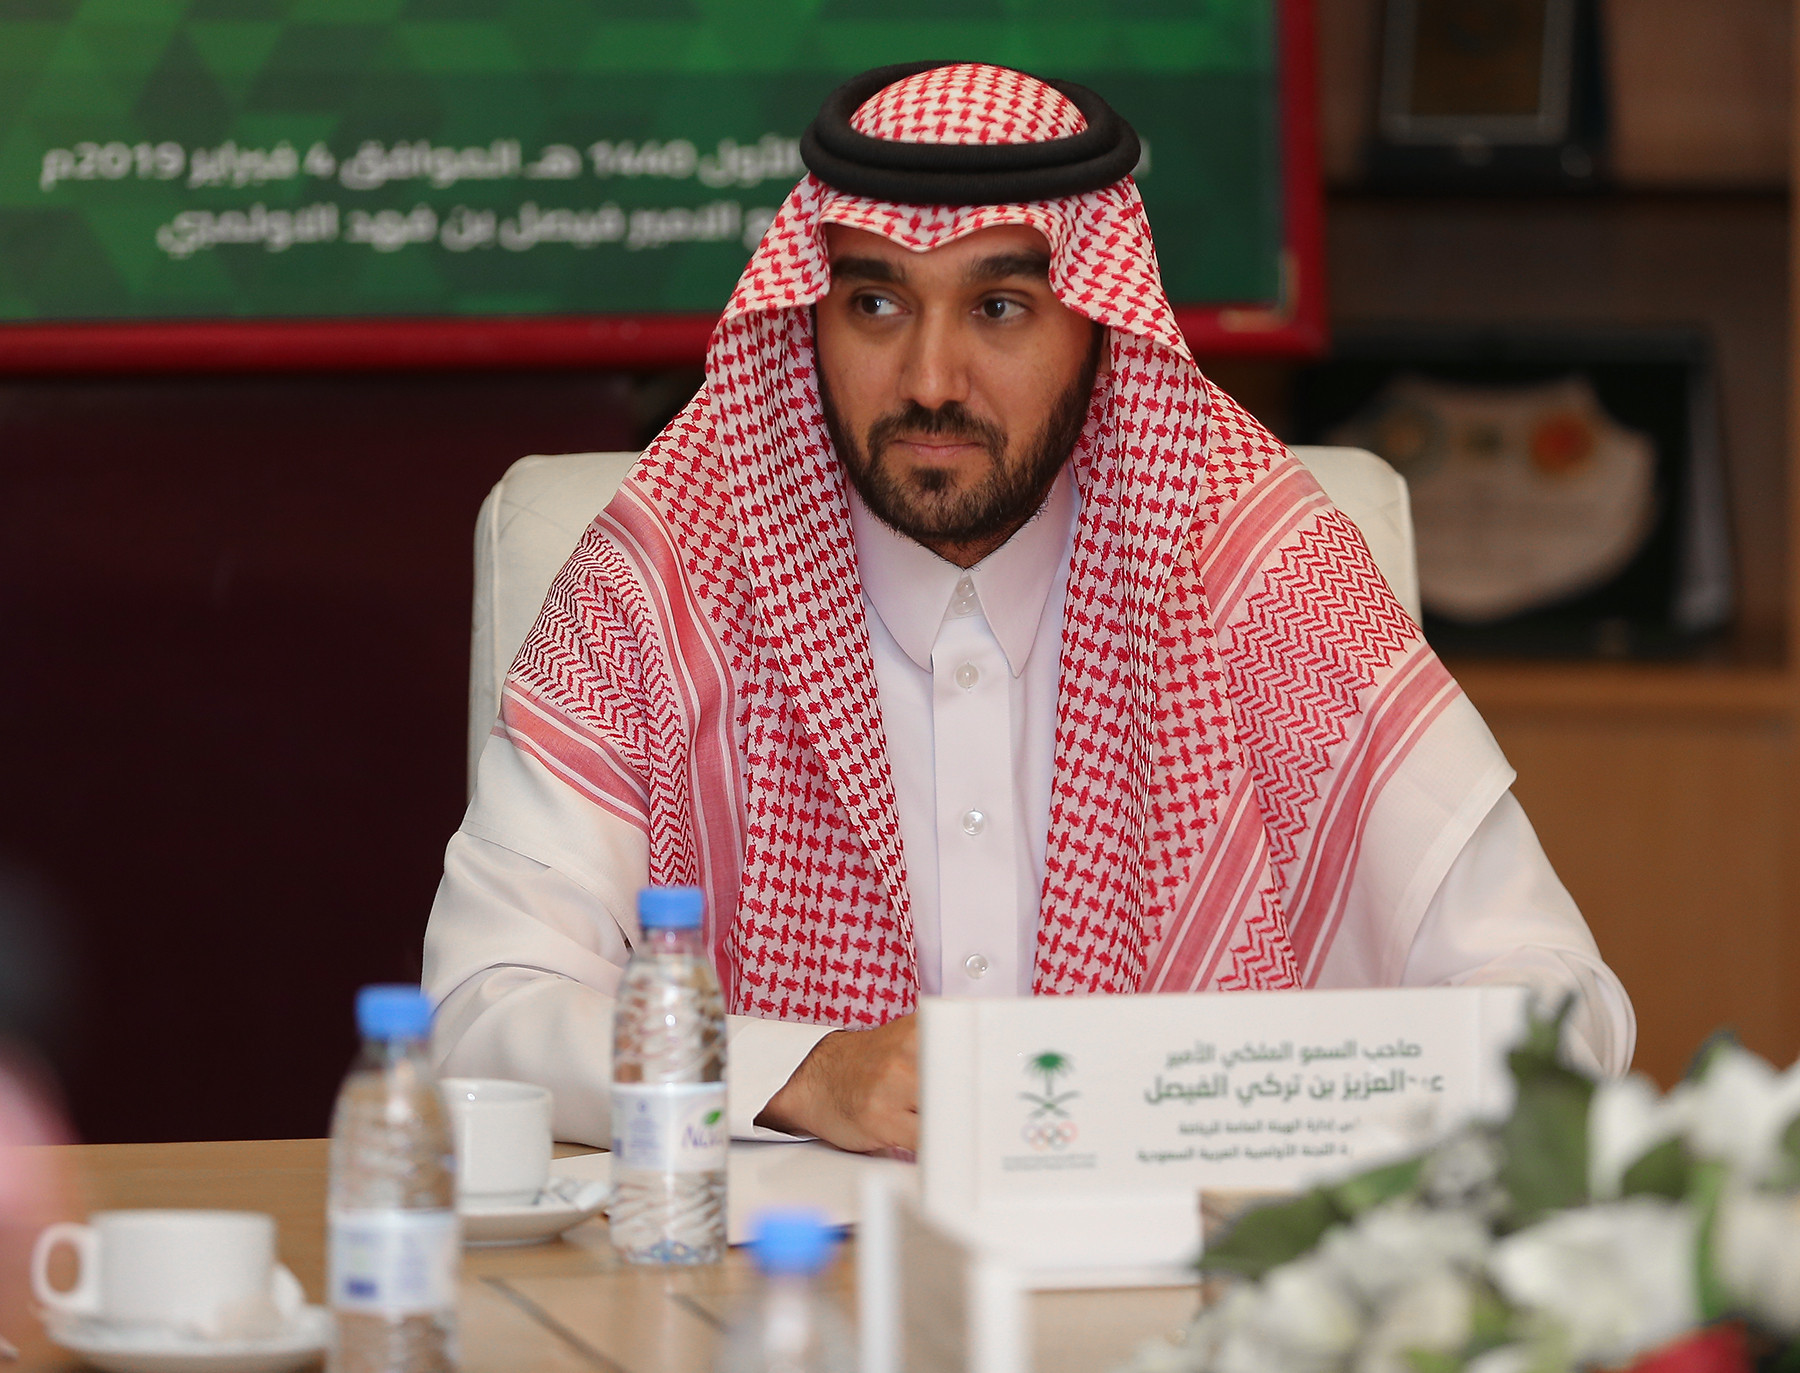 Abdulaziz bin Turki Al-Faisal helped run the forum ©SAOC